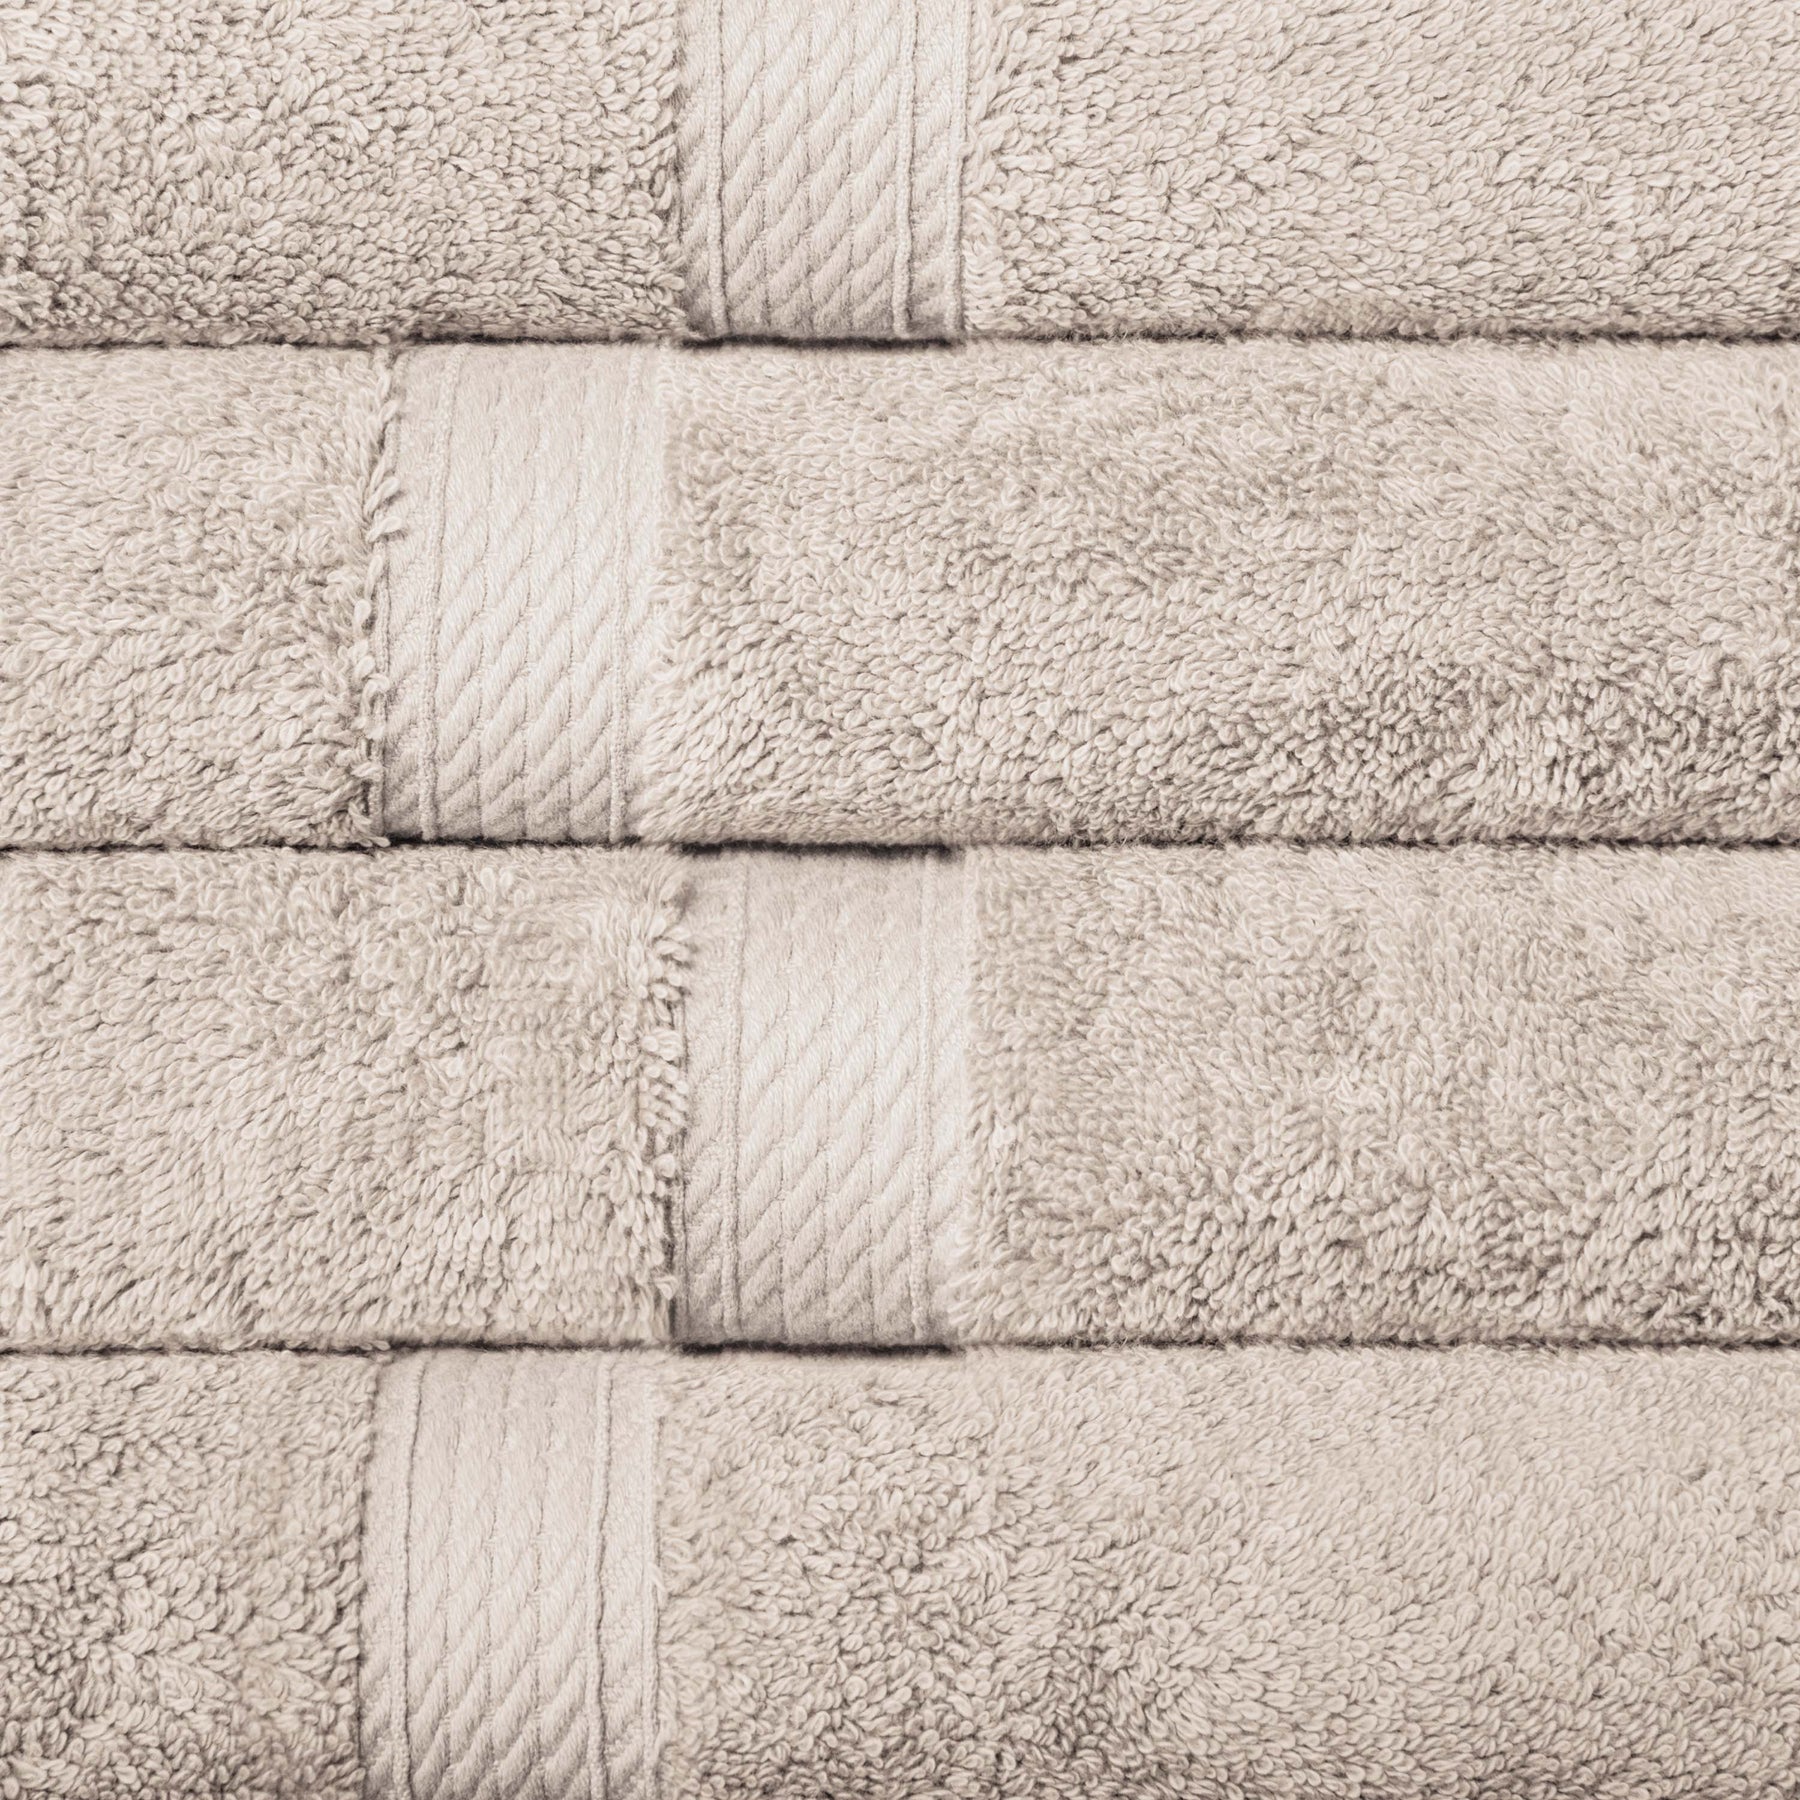 Superior Egyptian Cotton Plush Heavyweight Absorbent Luxury Soft Bath Towel - Stone